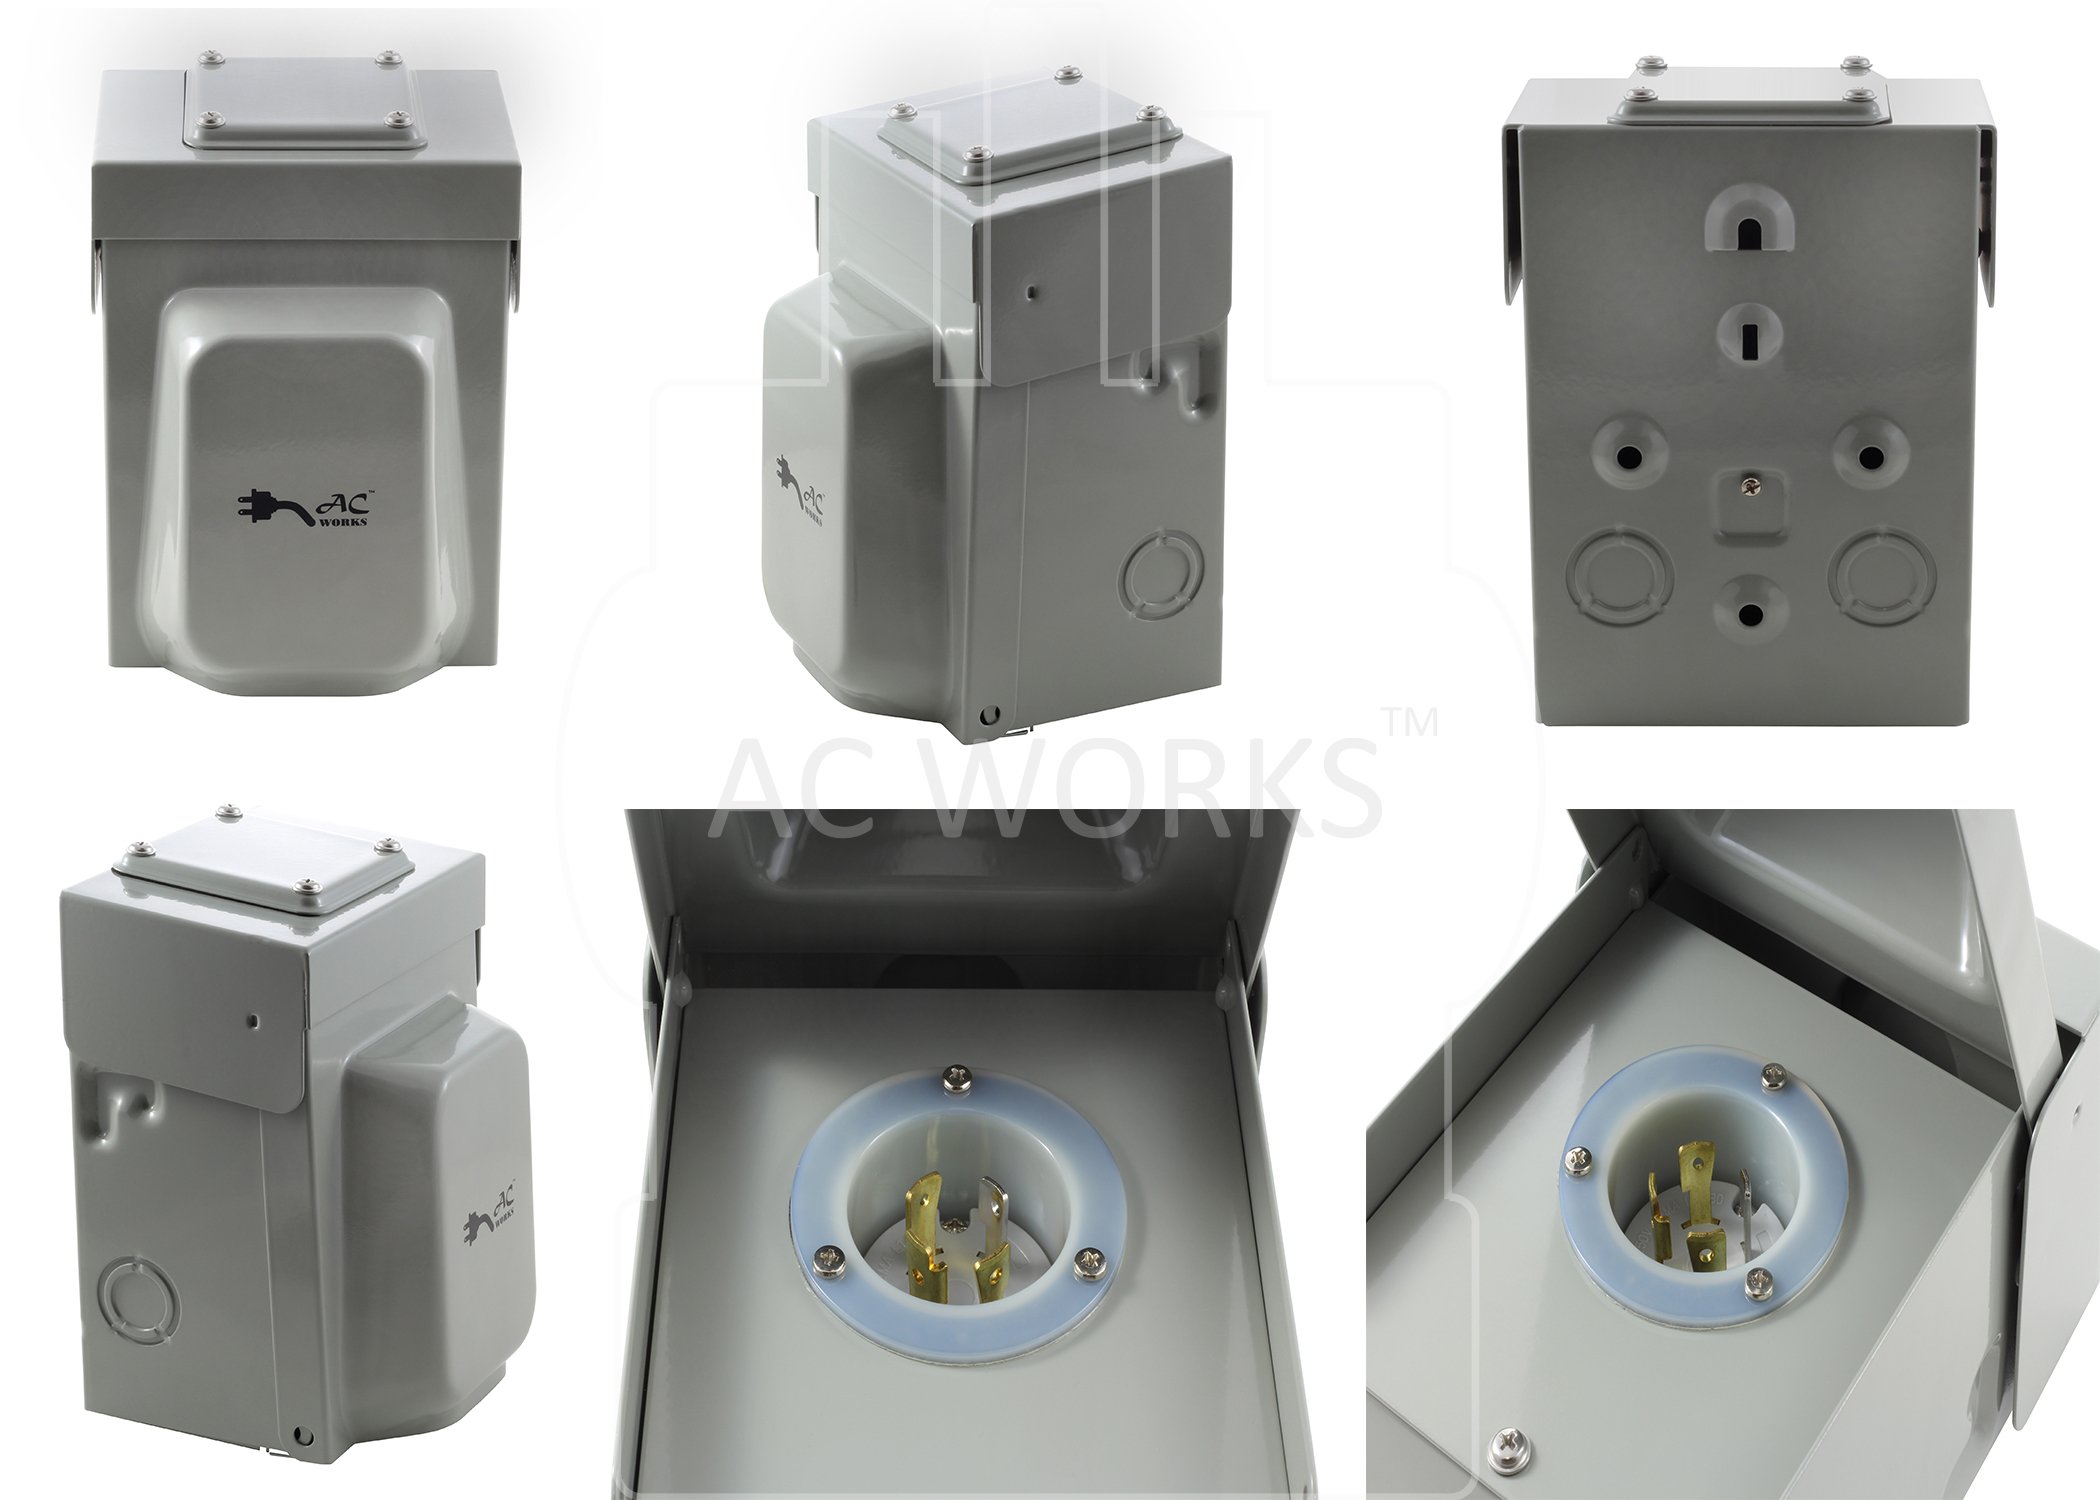 AC WORKS Super Durable Industrial Grade Locking Power Input Inlet (L14-30 Metal Box)